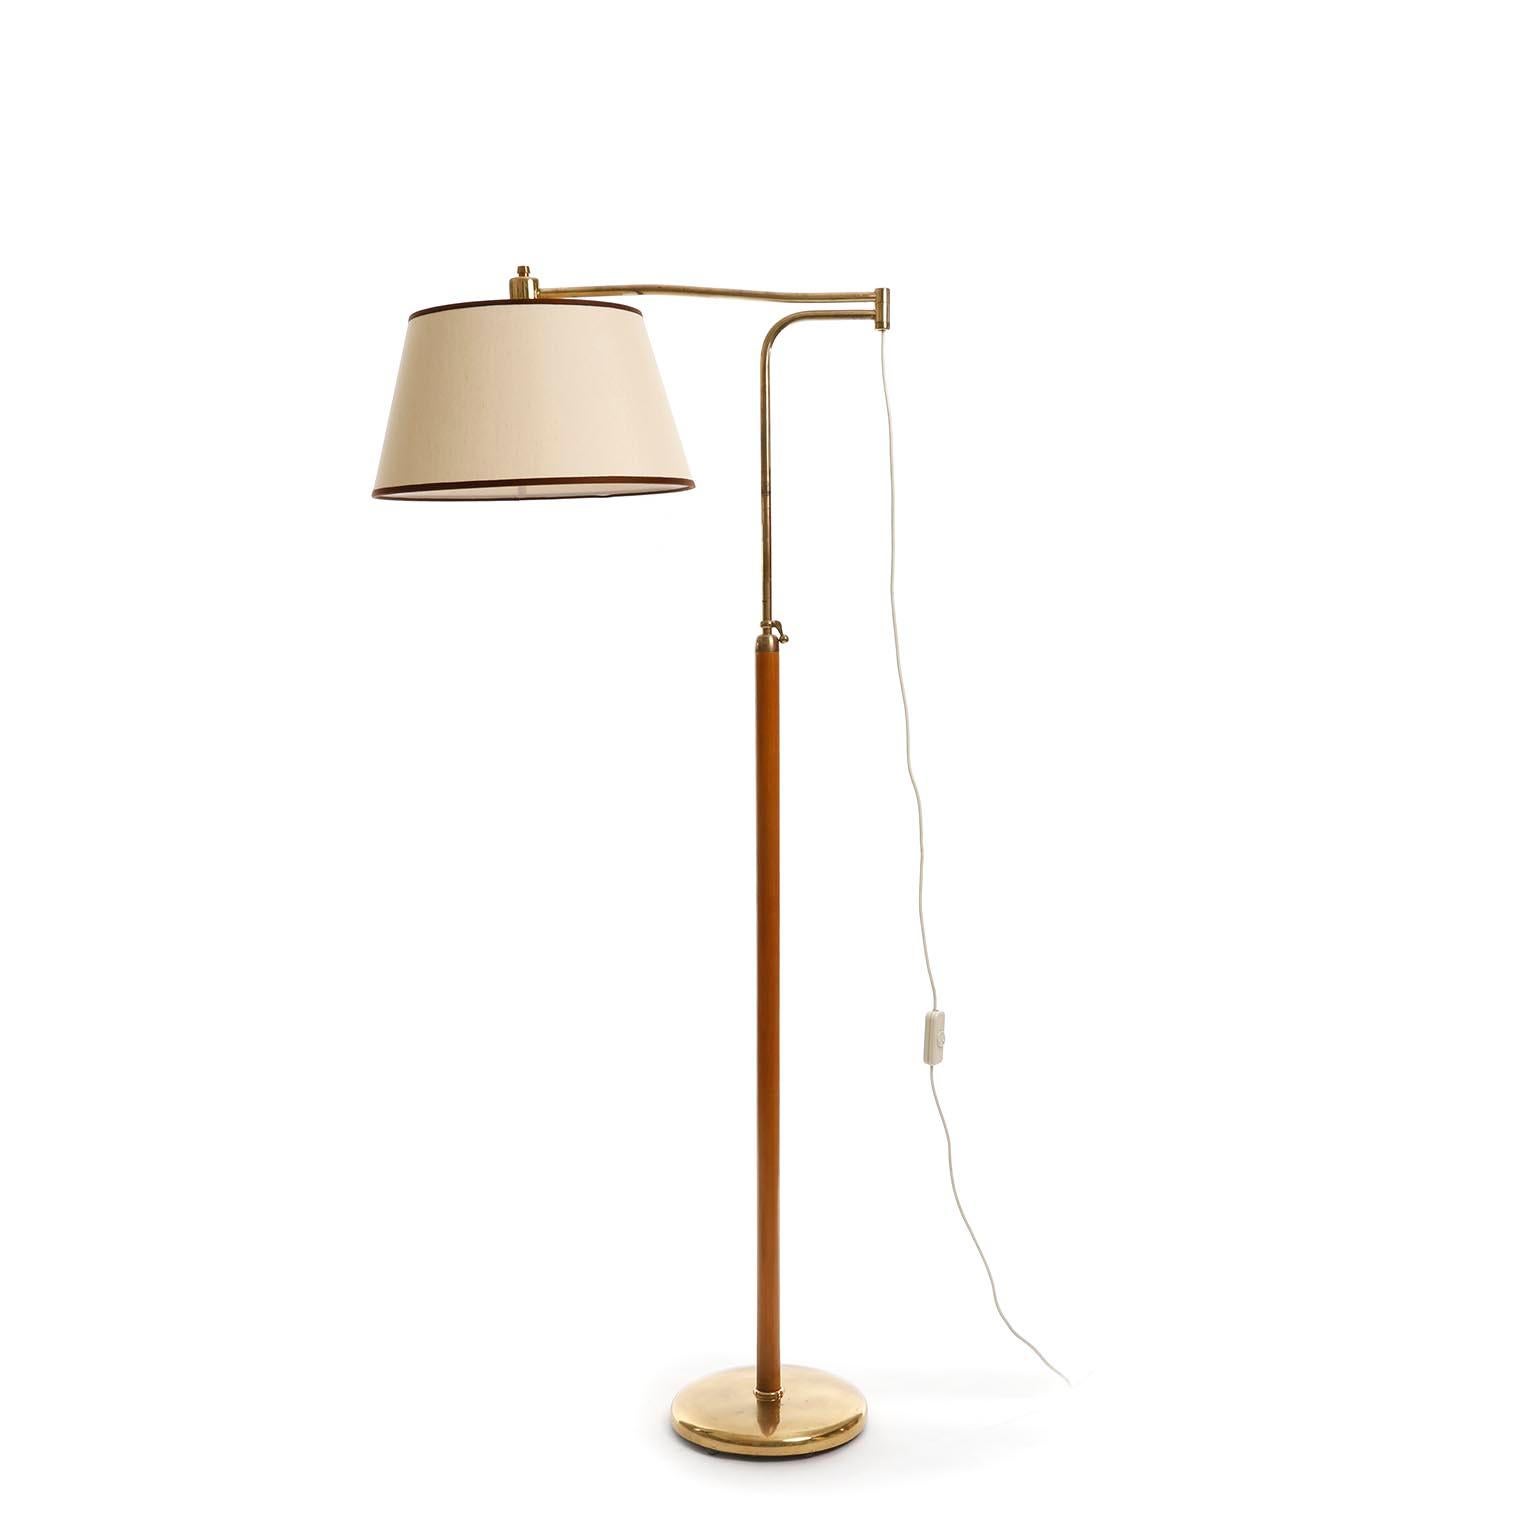 Josef Frank Adjustable Floor Lamp 'Neolift' by J.T. Kalmar, Brass Wood, 1950s In Good Condition For Sale In Hausmannstätten, AT